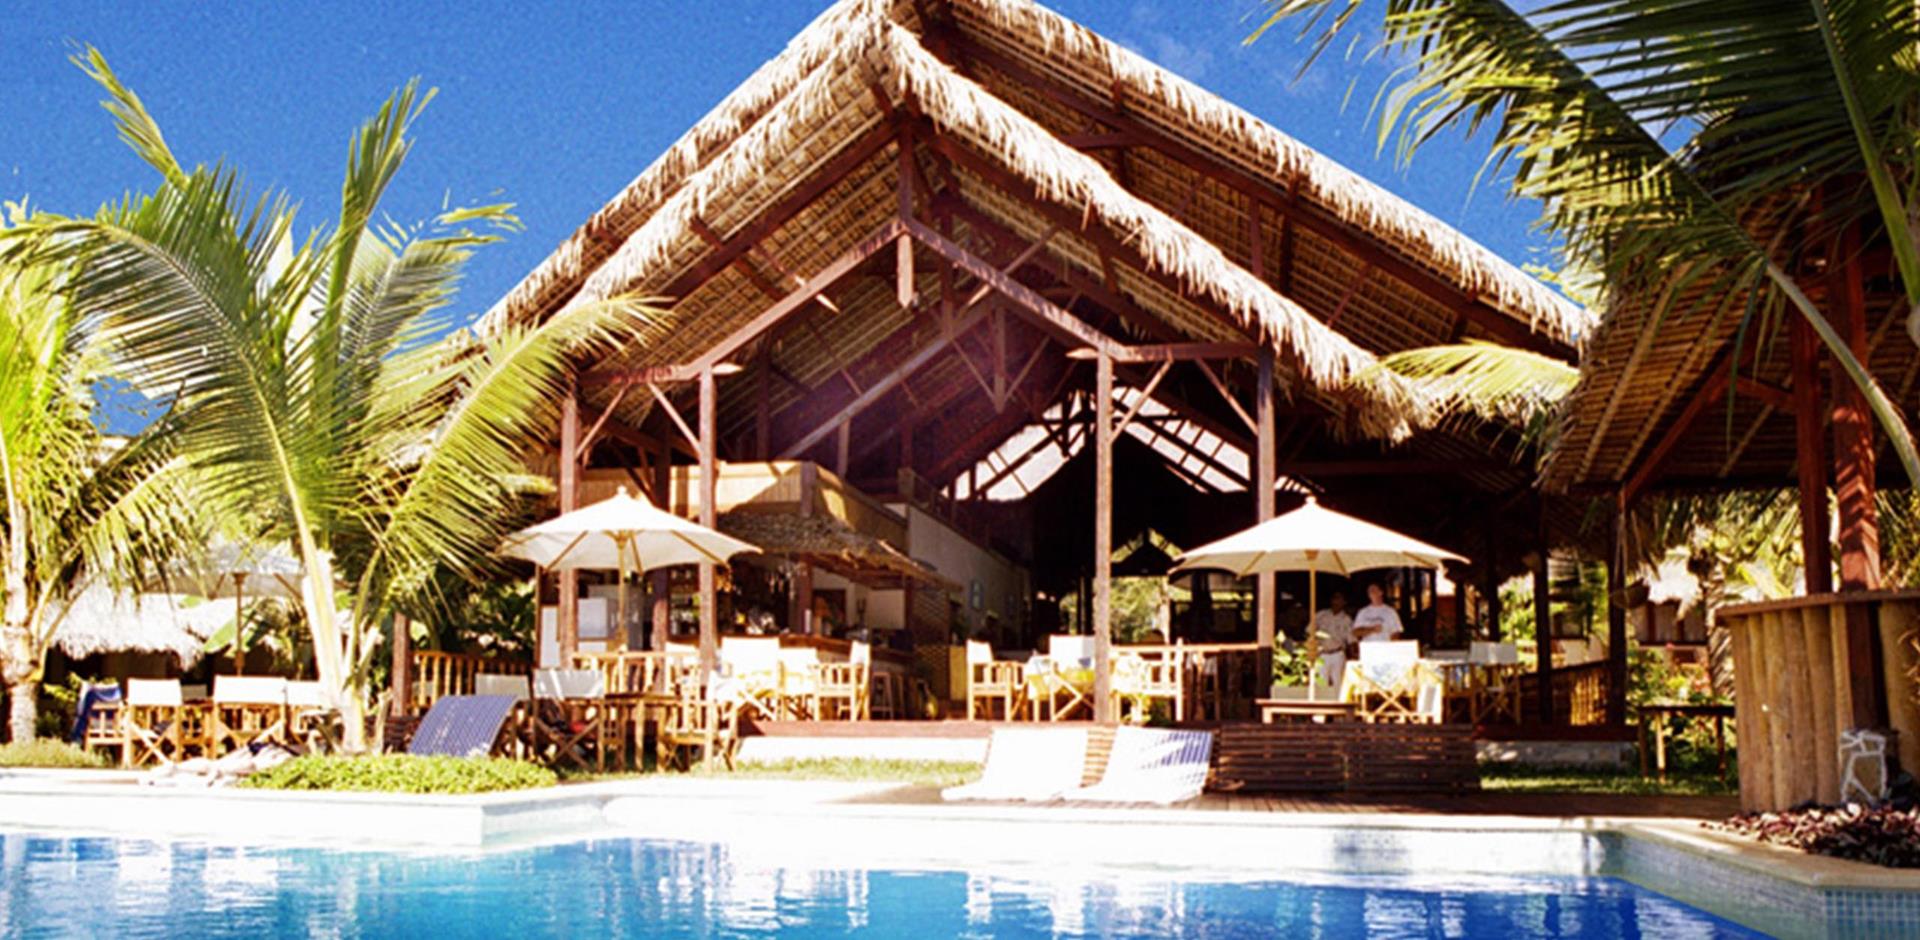 Poolside seating, Vanila Hotel & Spa, Madagascar, A&K